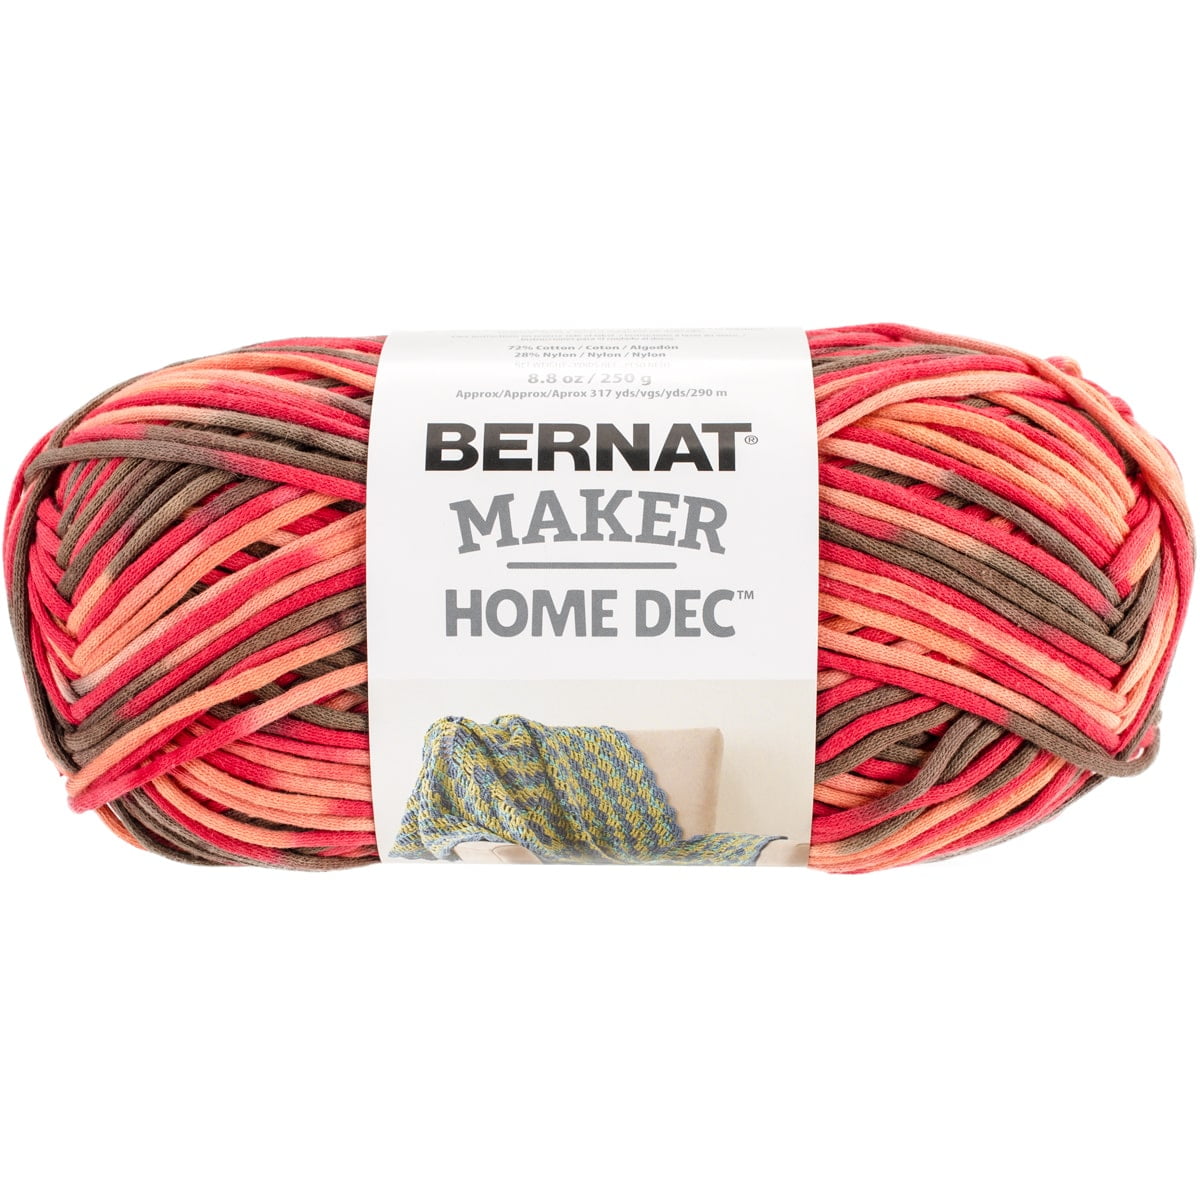 Bernat Maker Home Dec Yarn - Spice Variegate